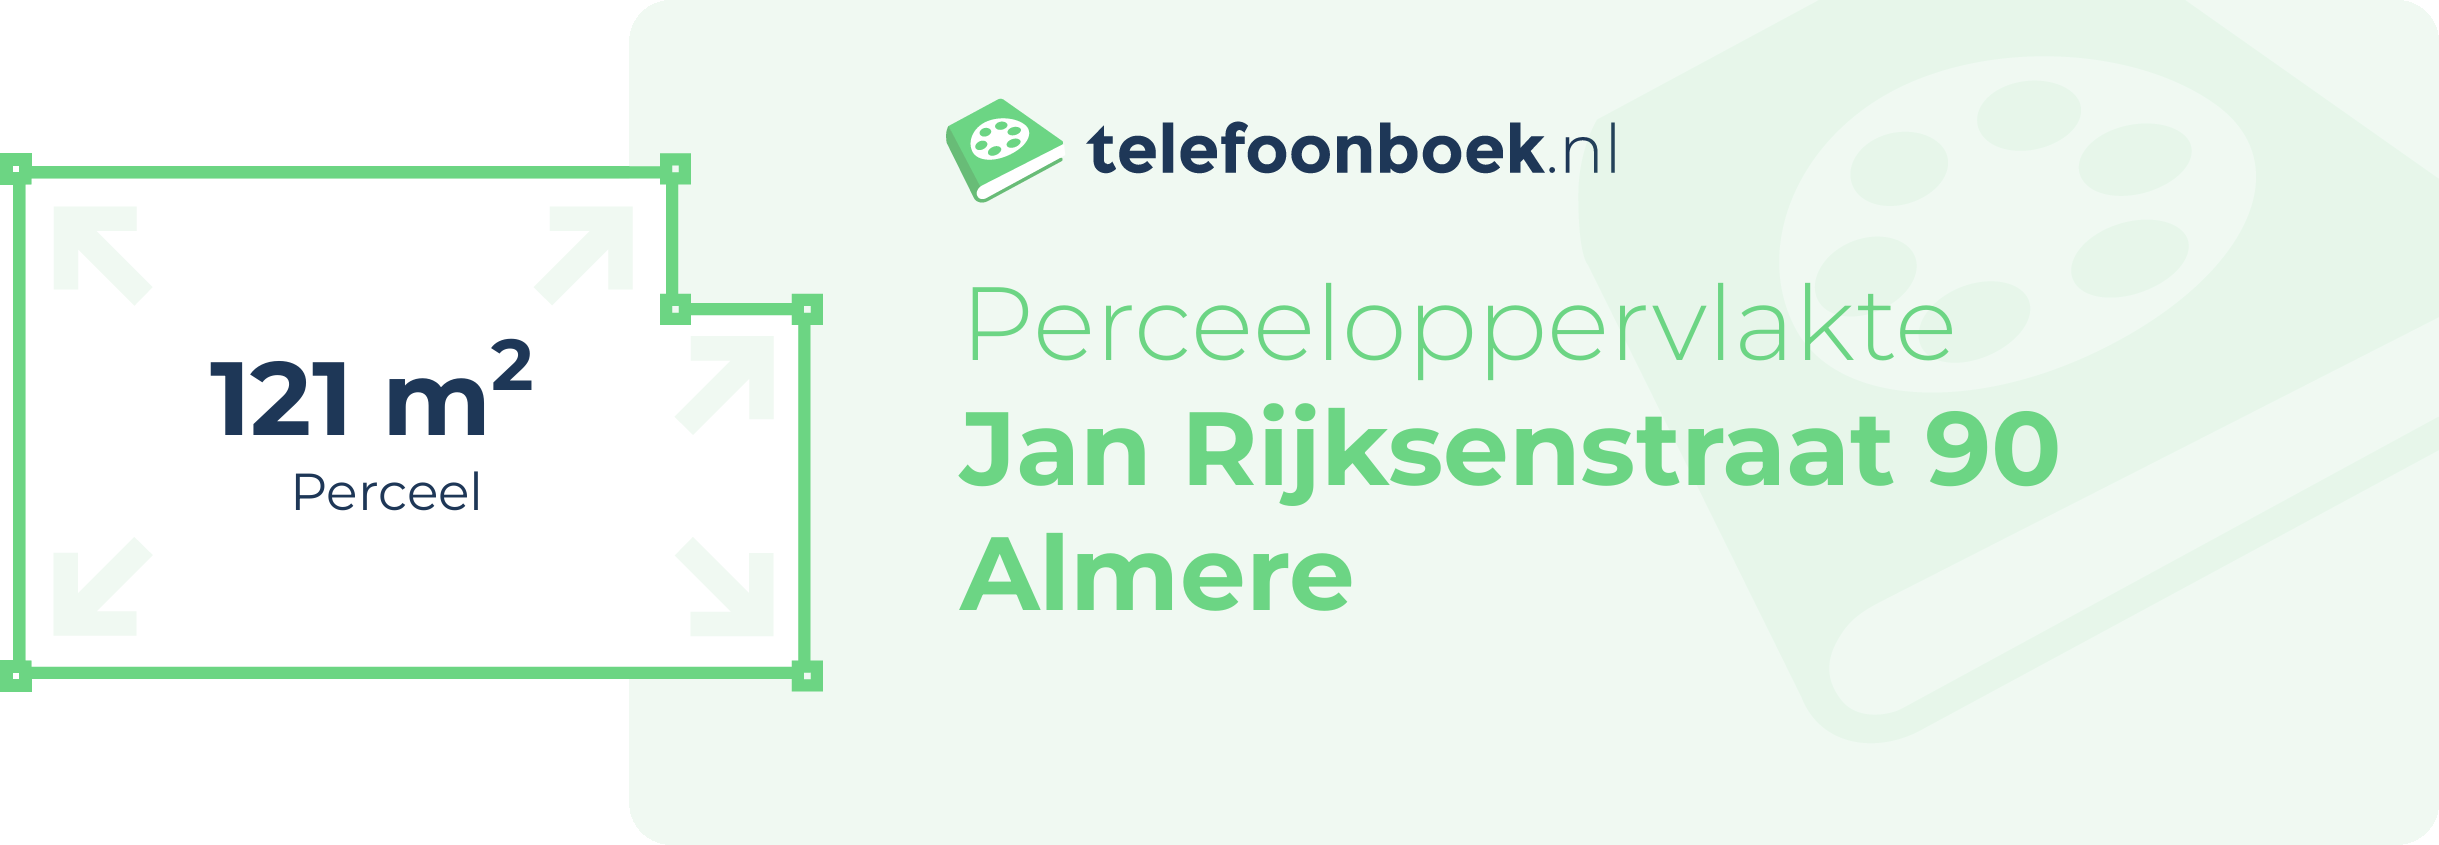 Perceeloppervlakte Jan Rijksenstraat 90 Almere